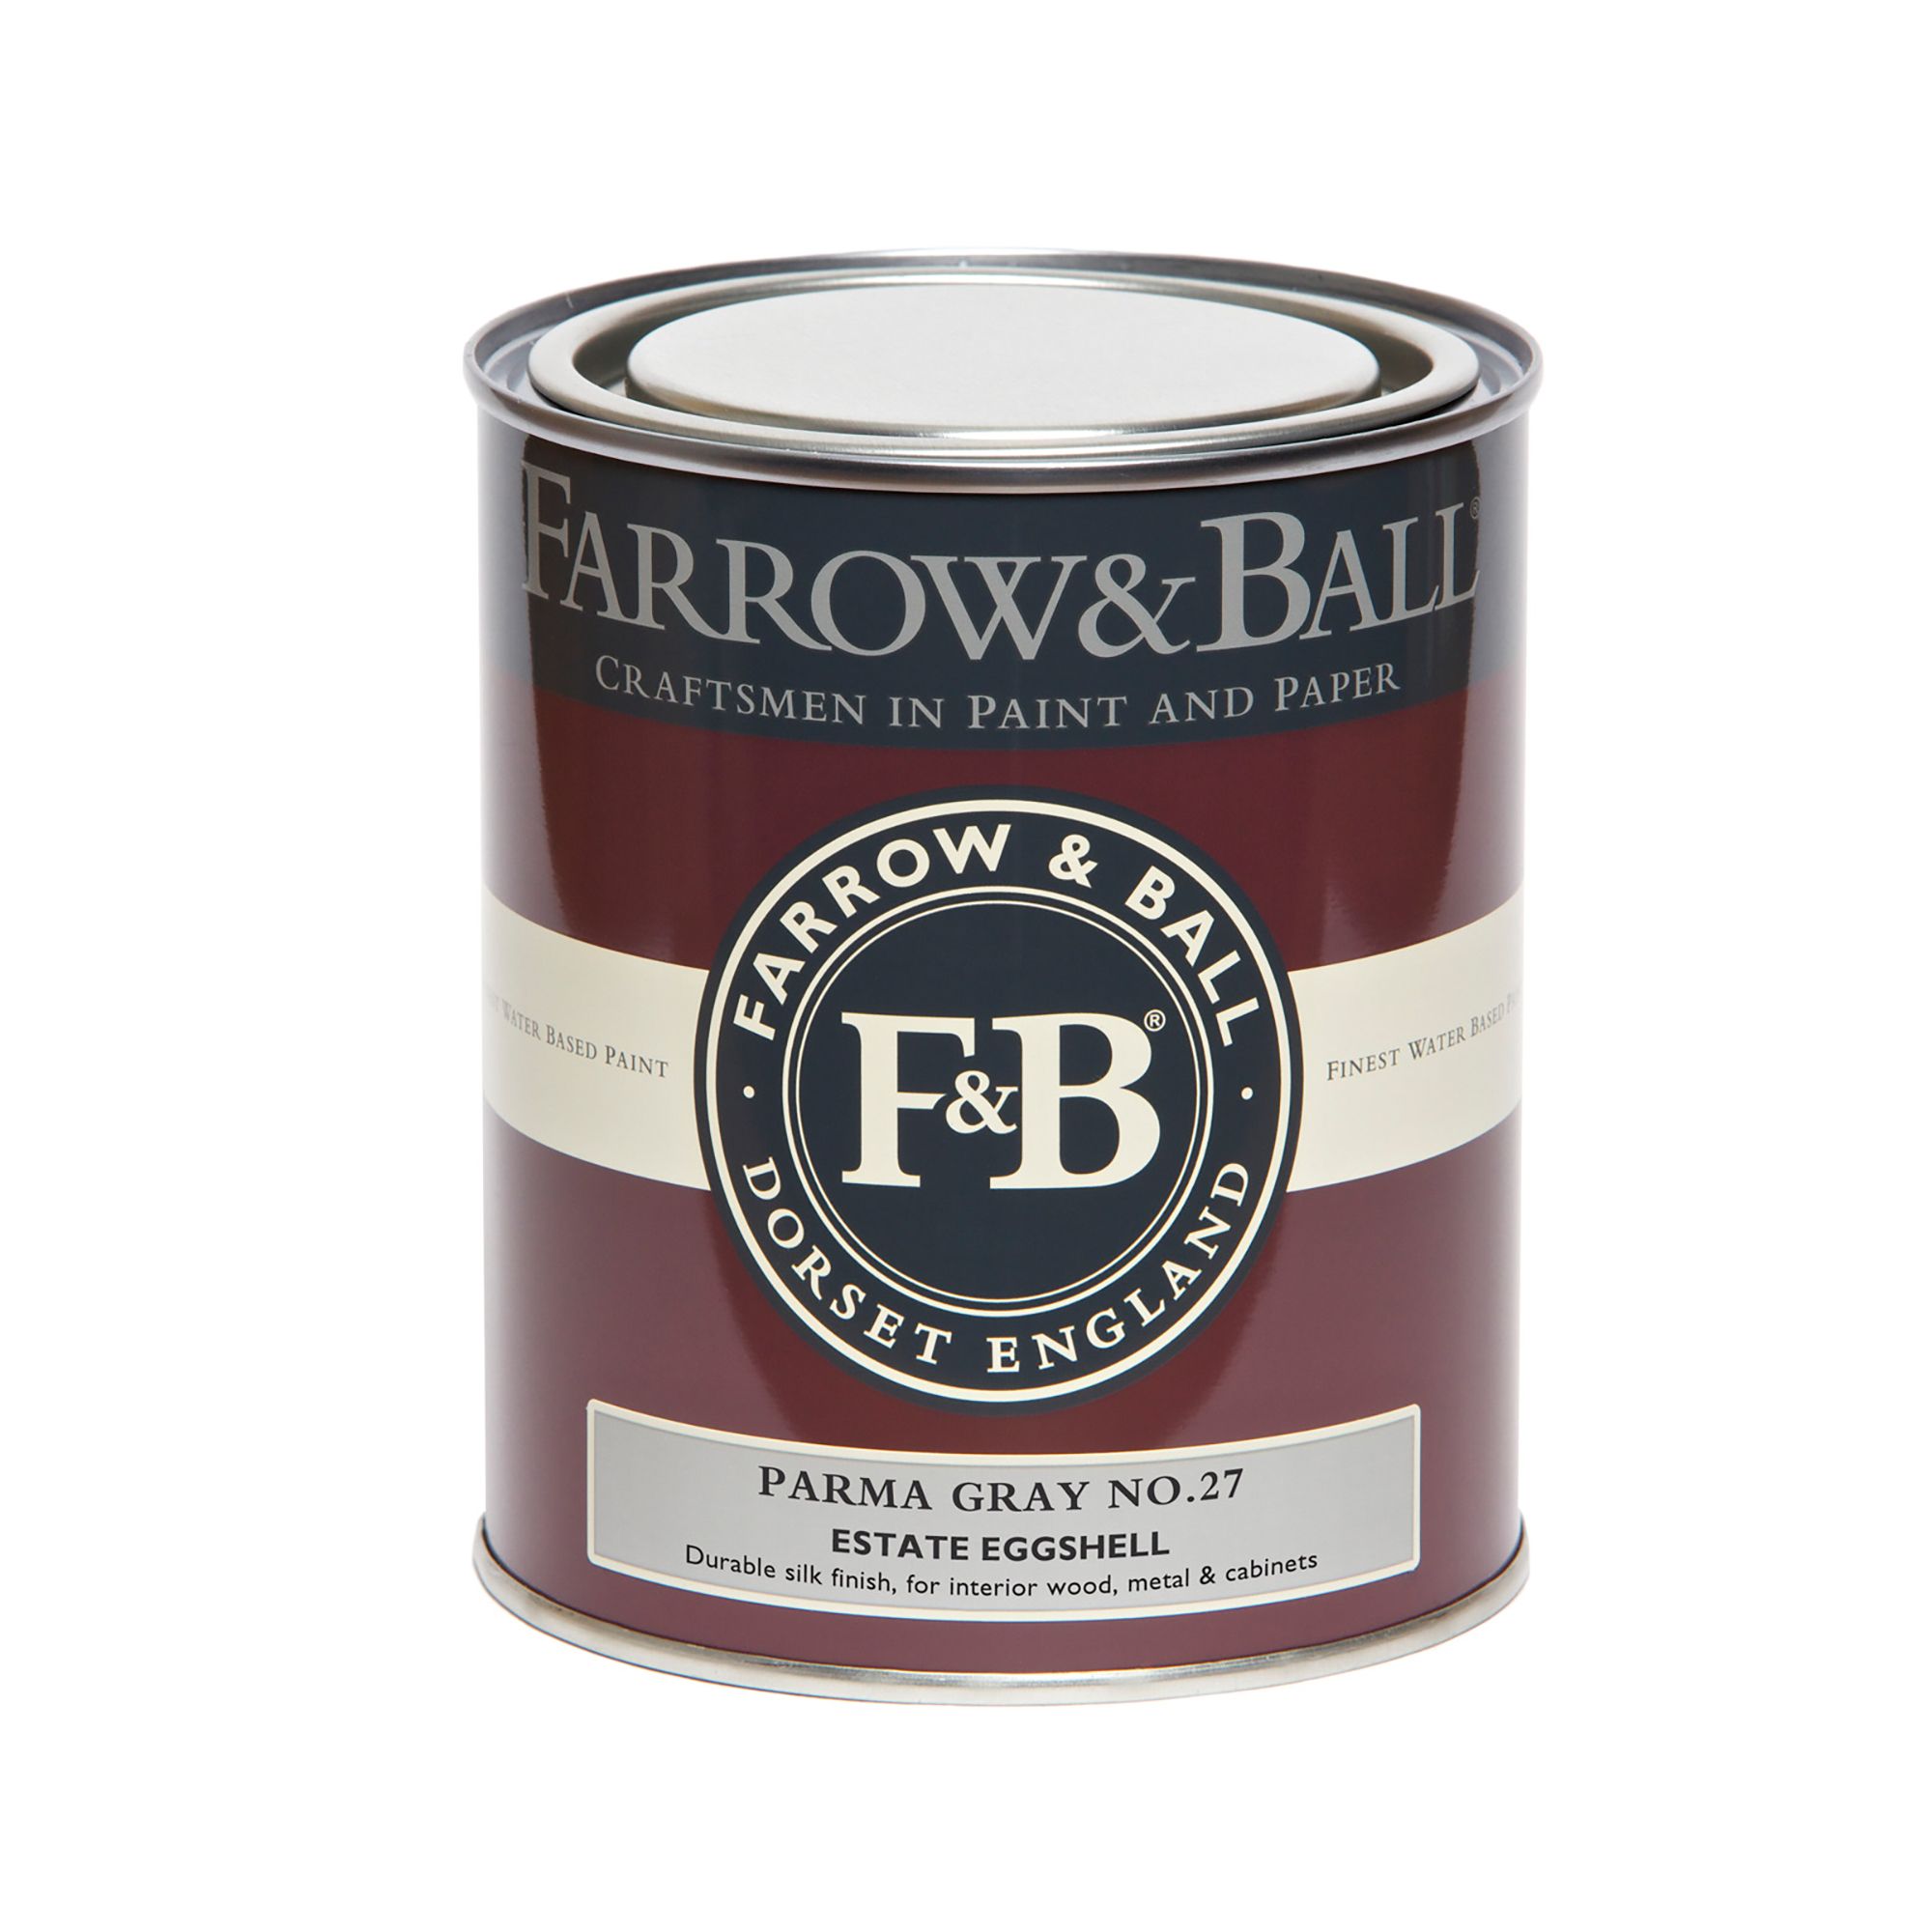 Farrow & Ball Estate Parma Gray No.27 Eggshell Paint, 750ml